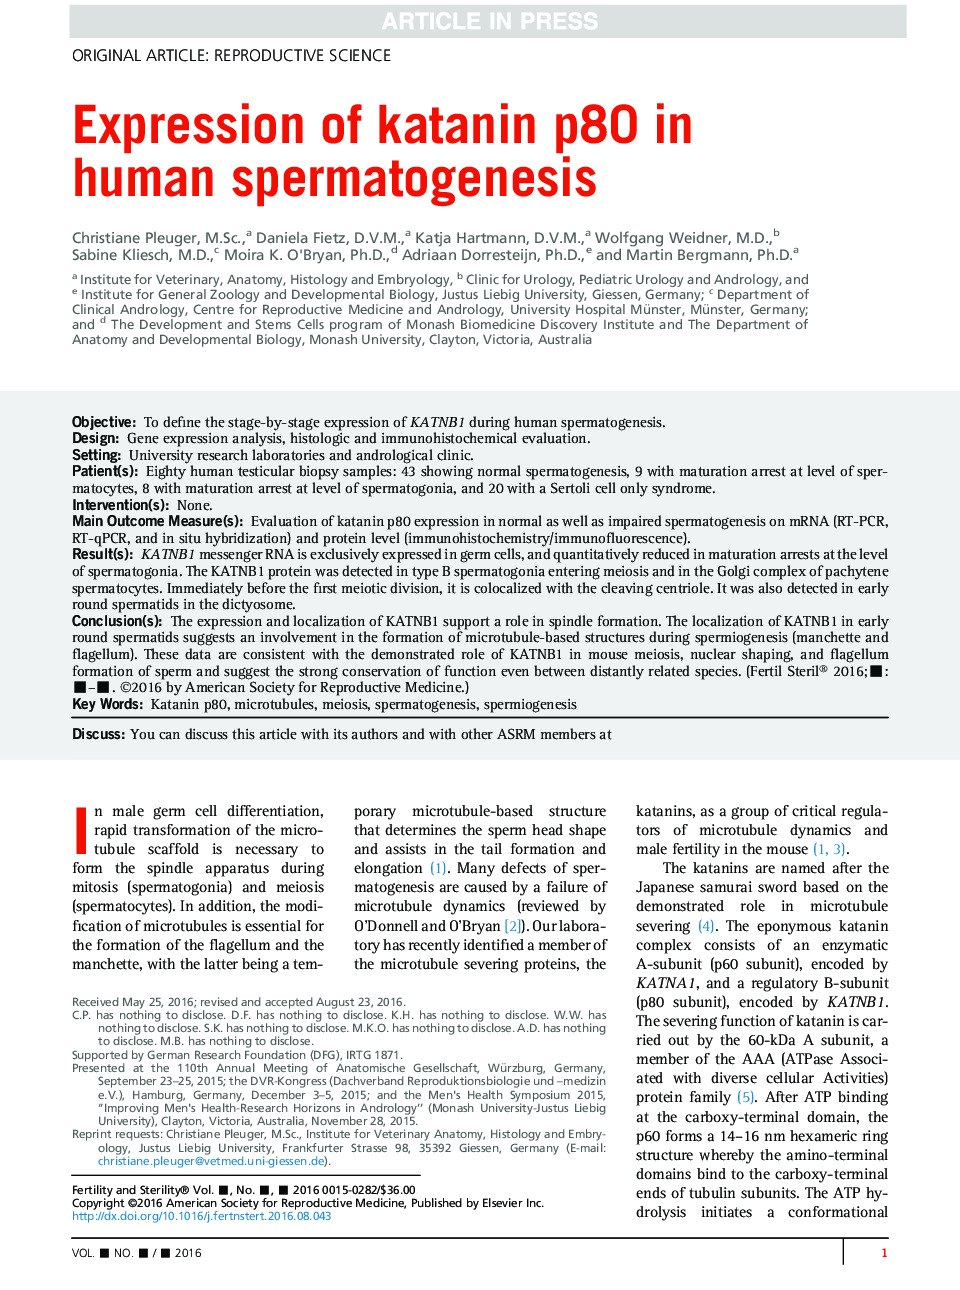 Expression of katanin p80 in human spermatogenesis